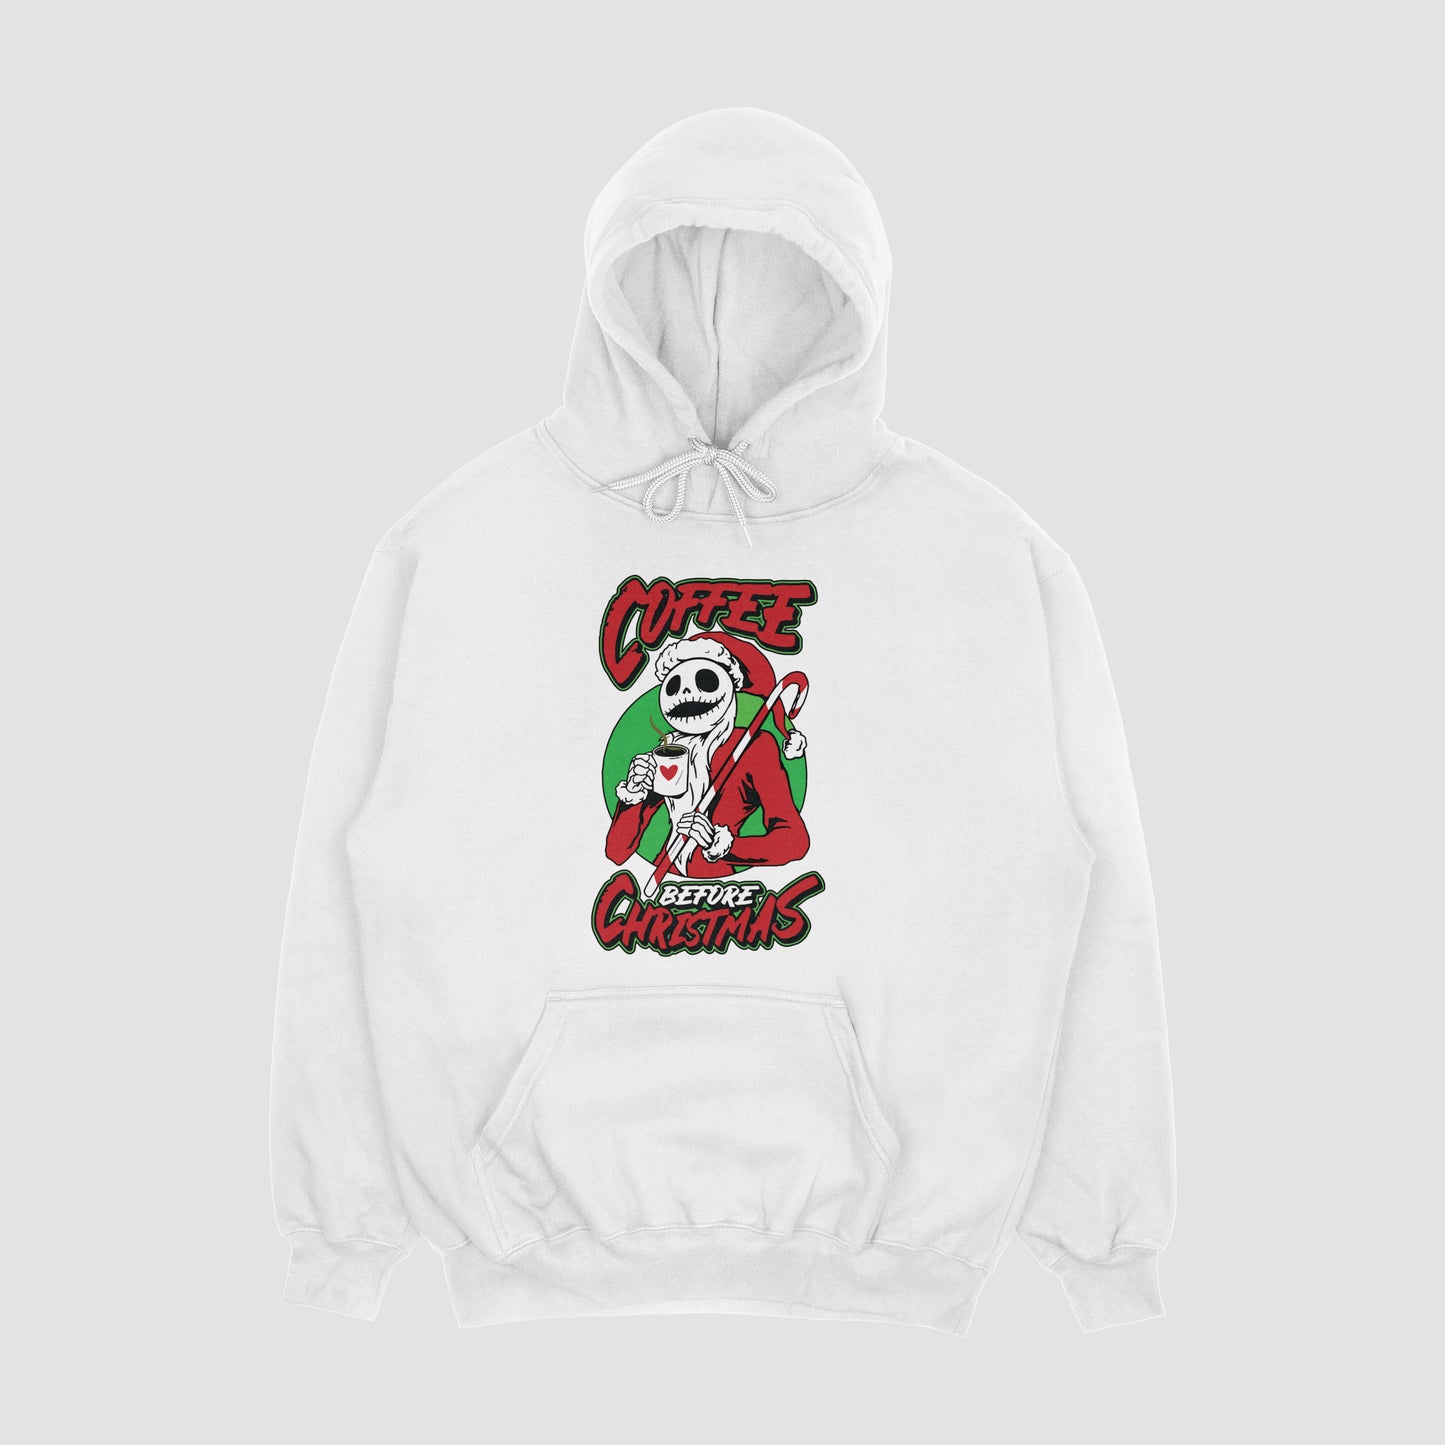 Coffee Bedore Christmas hoodie